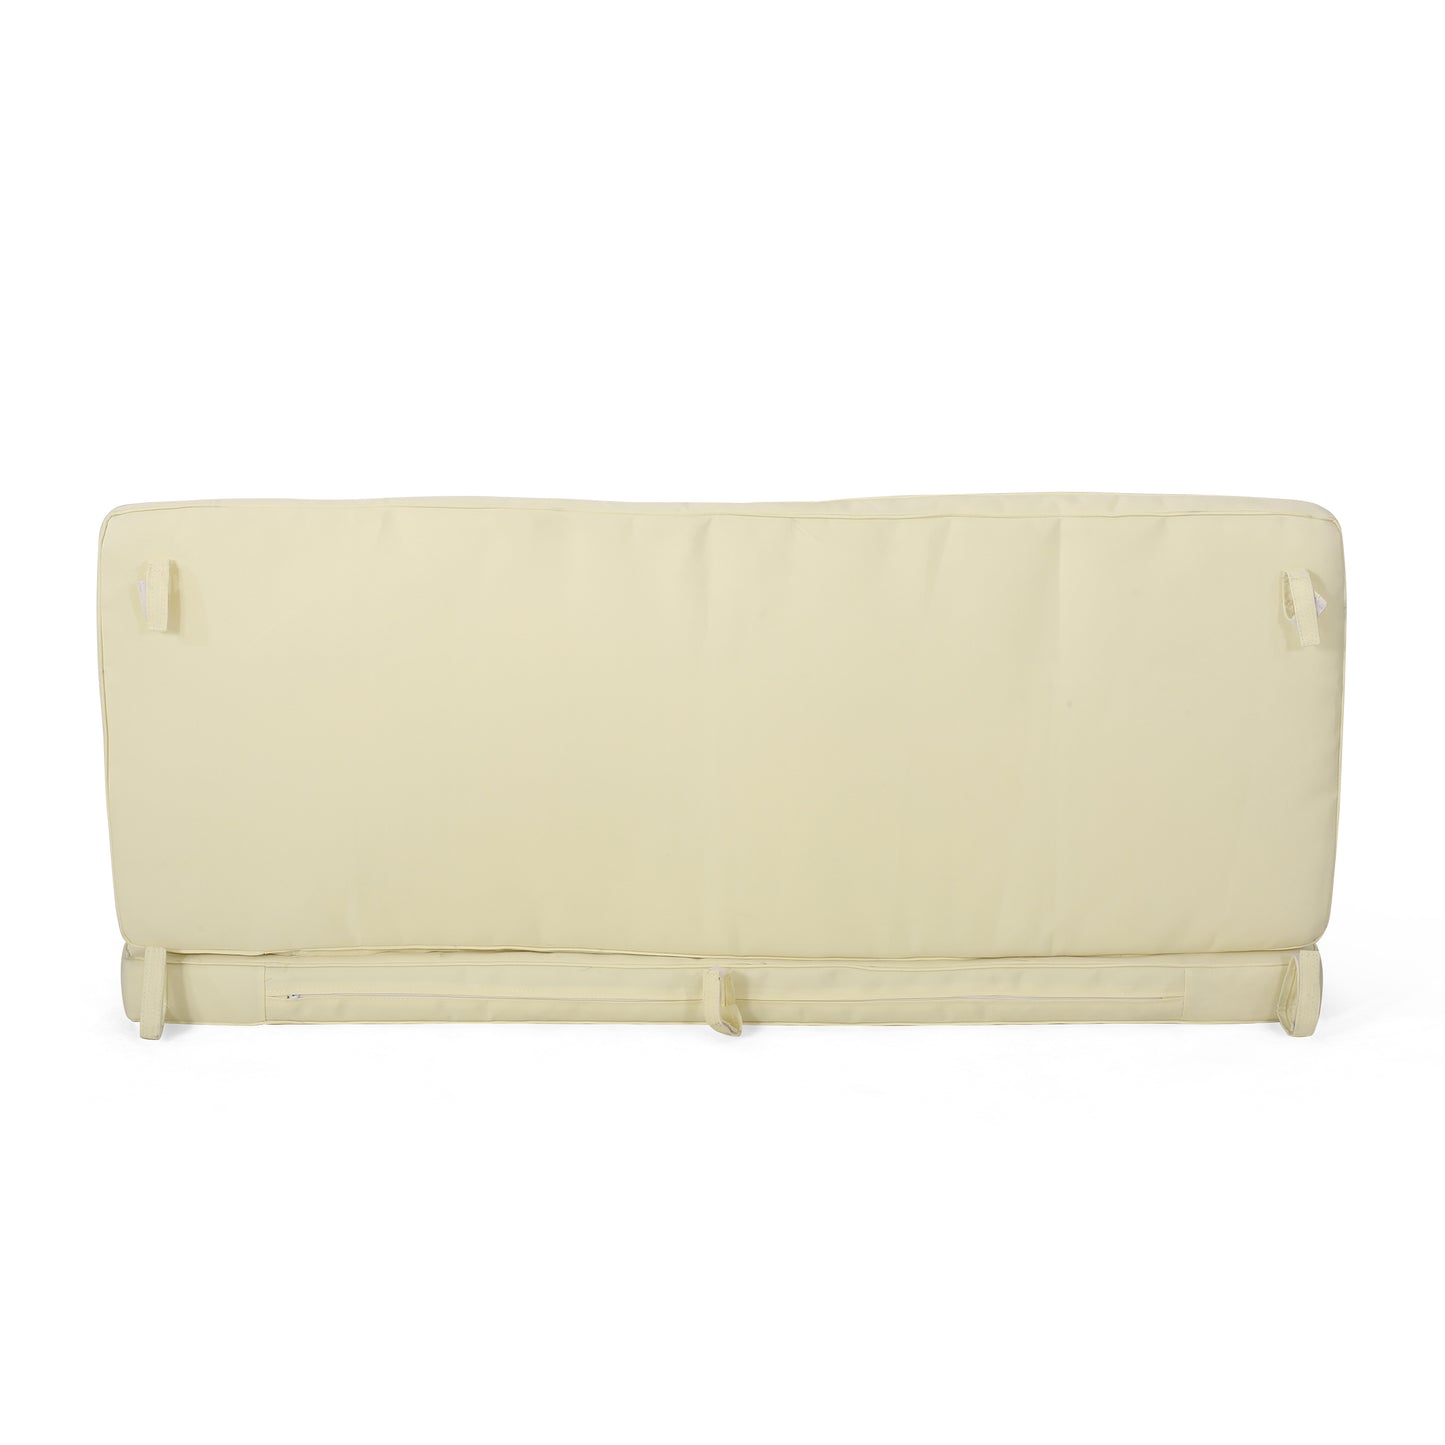 Eydan Outdoor Water Resistant Fabric Loveseat Cushions